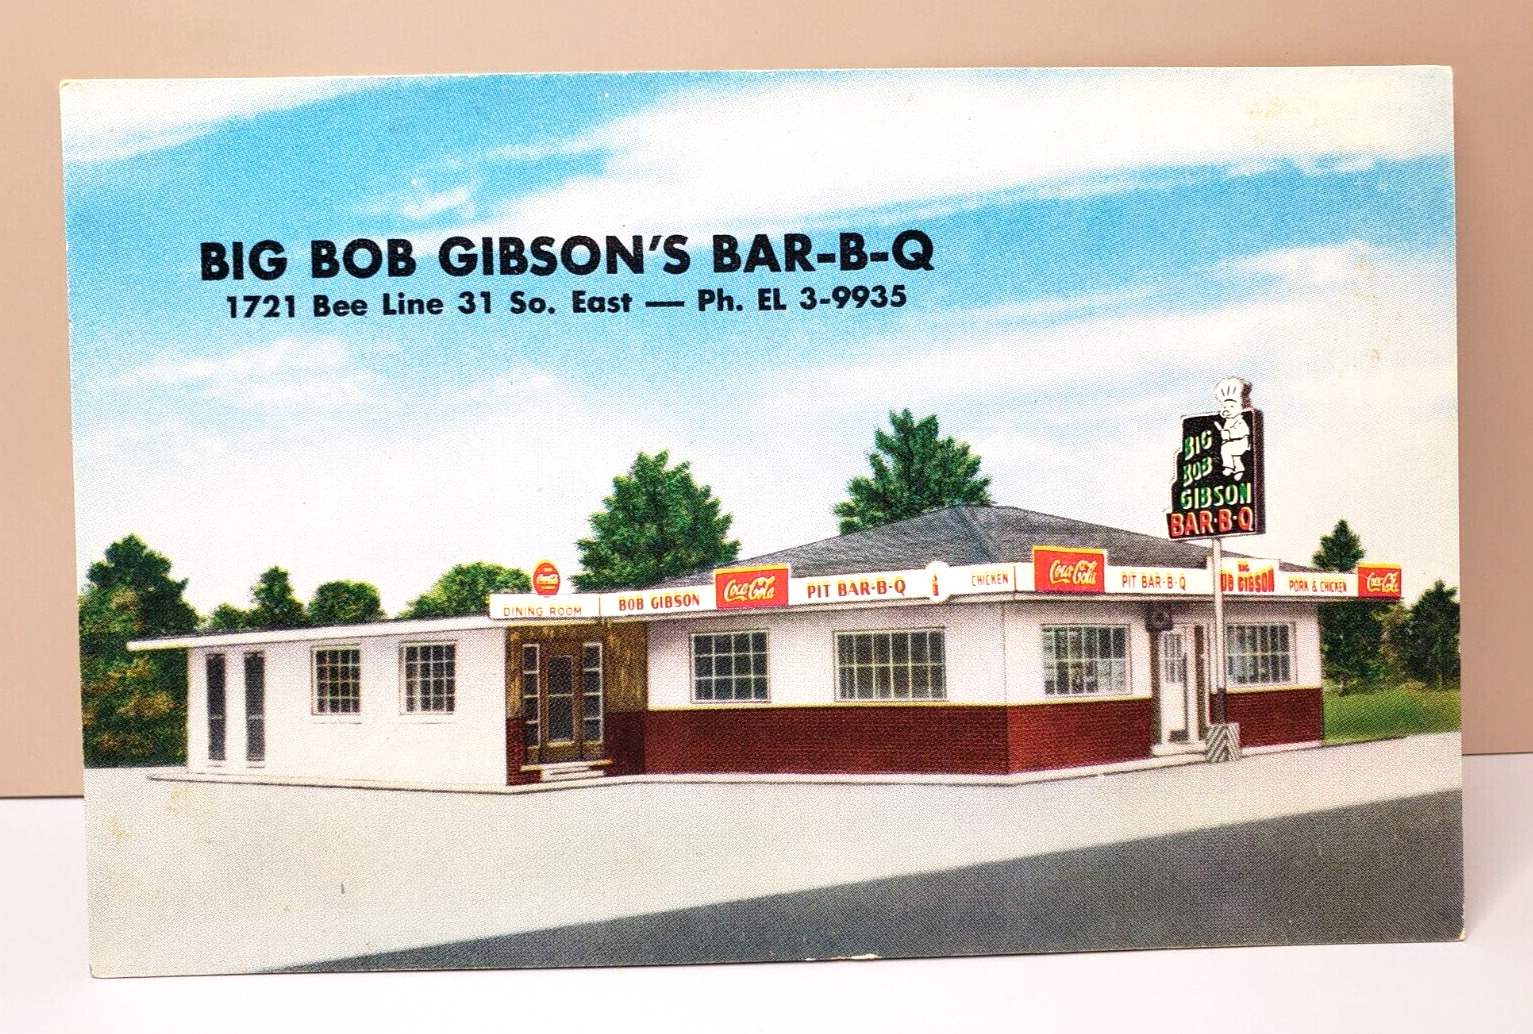 Big Bob Gibson's Barbecue - Decatur Alabama - Vintage Postcard